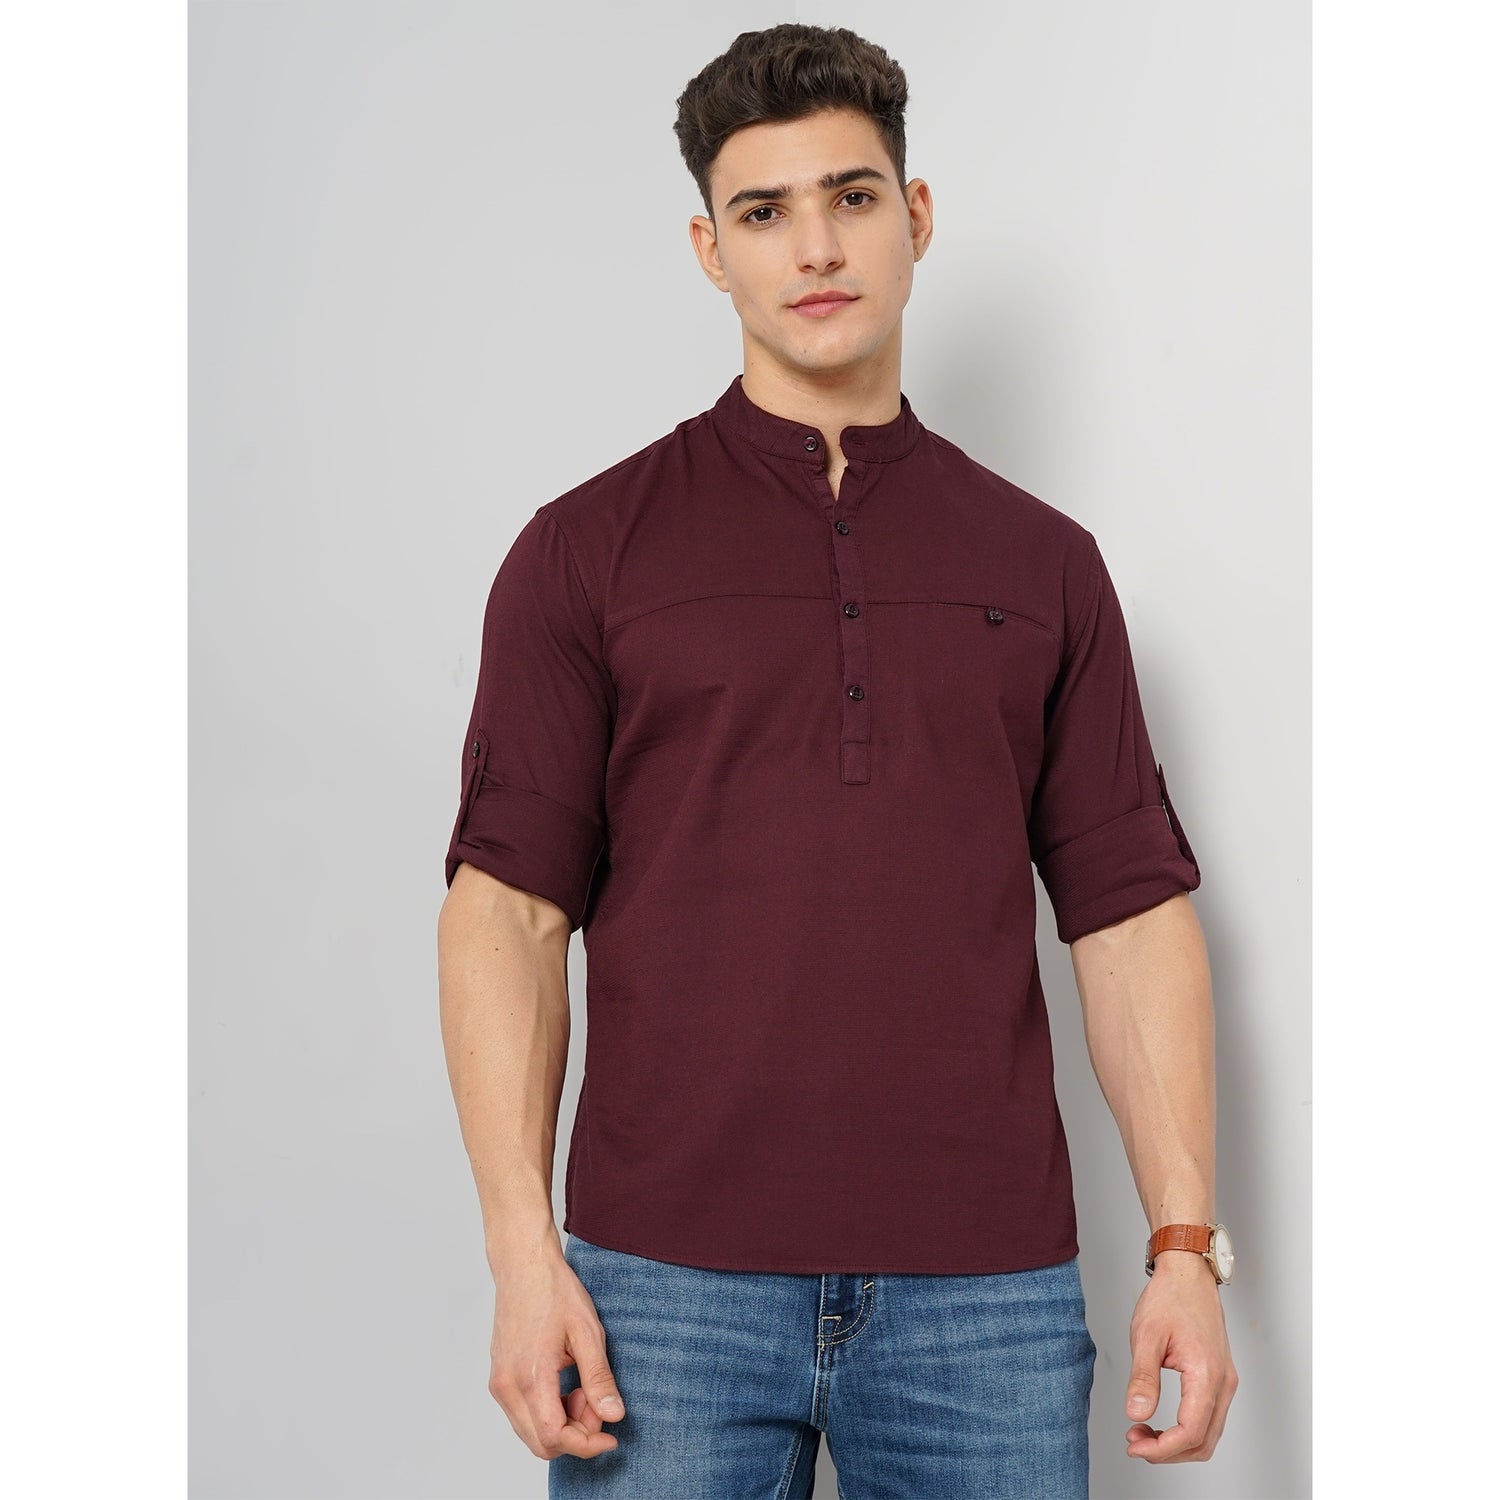 Men's Solid Burgundy Full Contemporary Cotton Shirt (FAWAFLMAO)